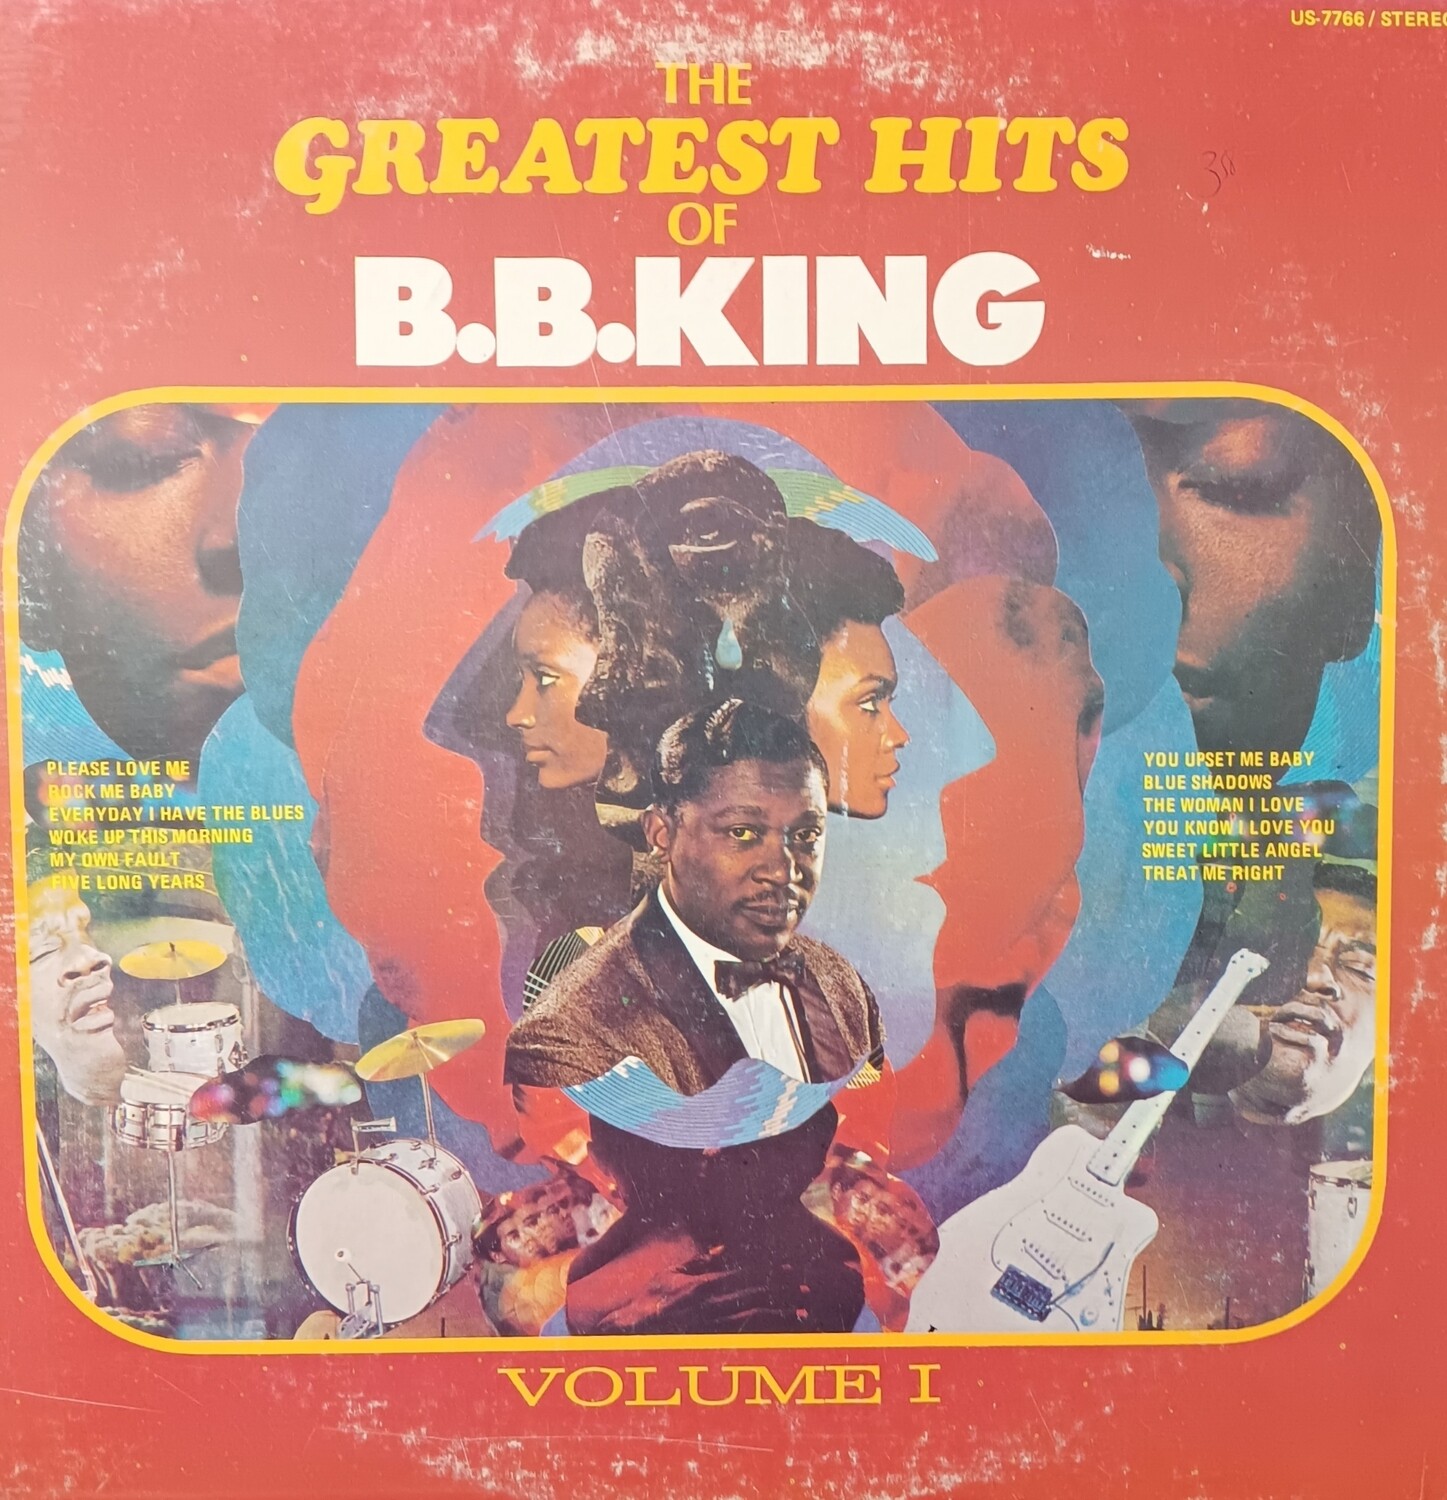 B.B. KING - The greatest hits of BB King Volume 1